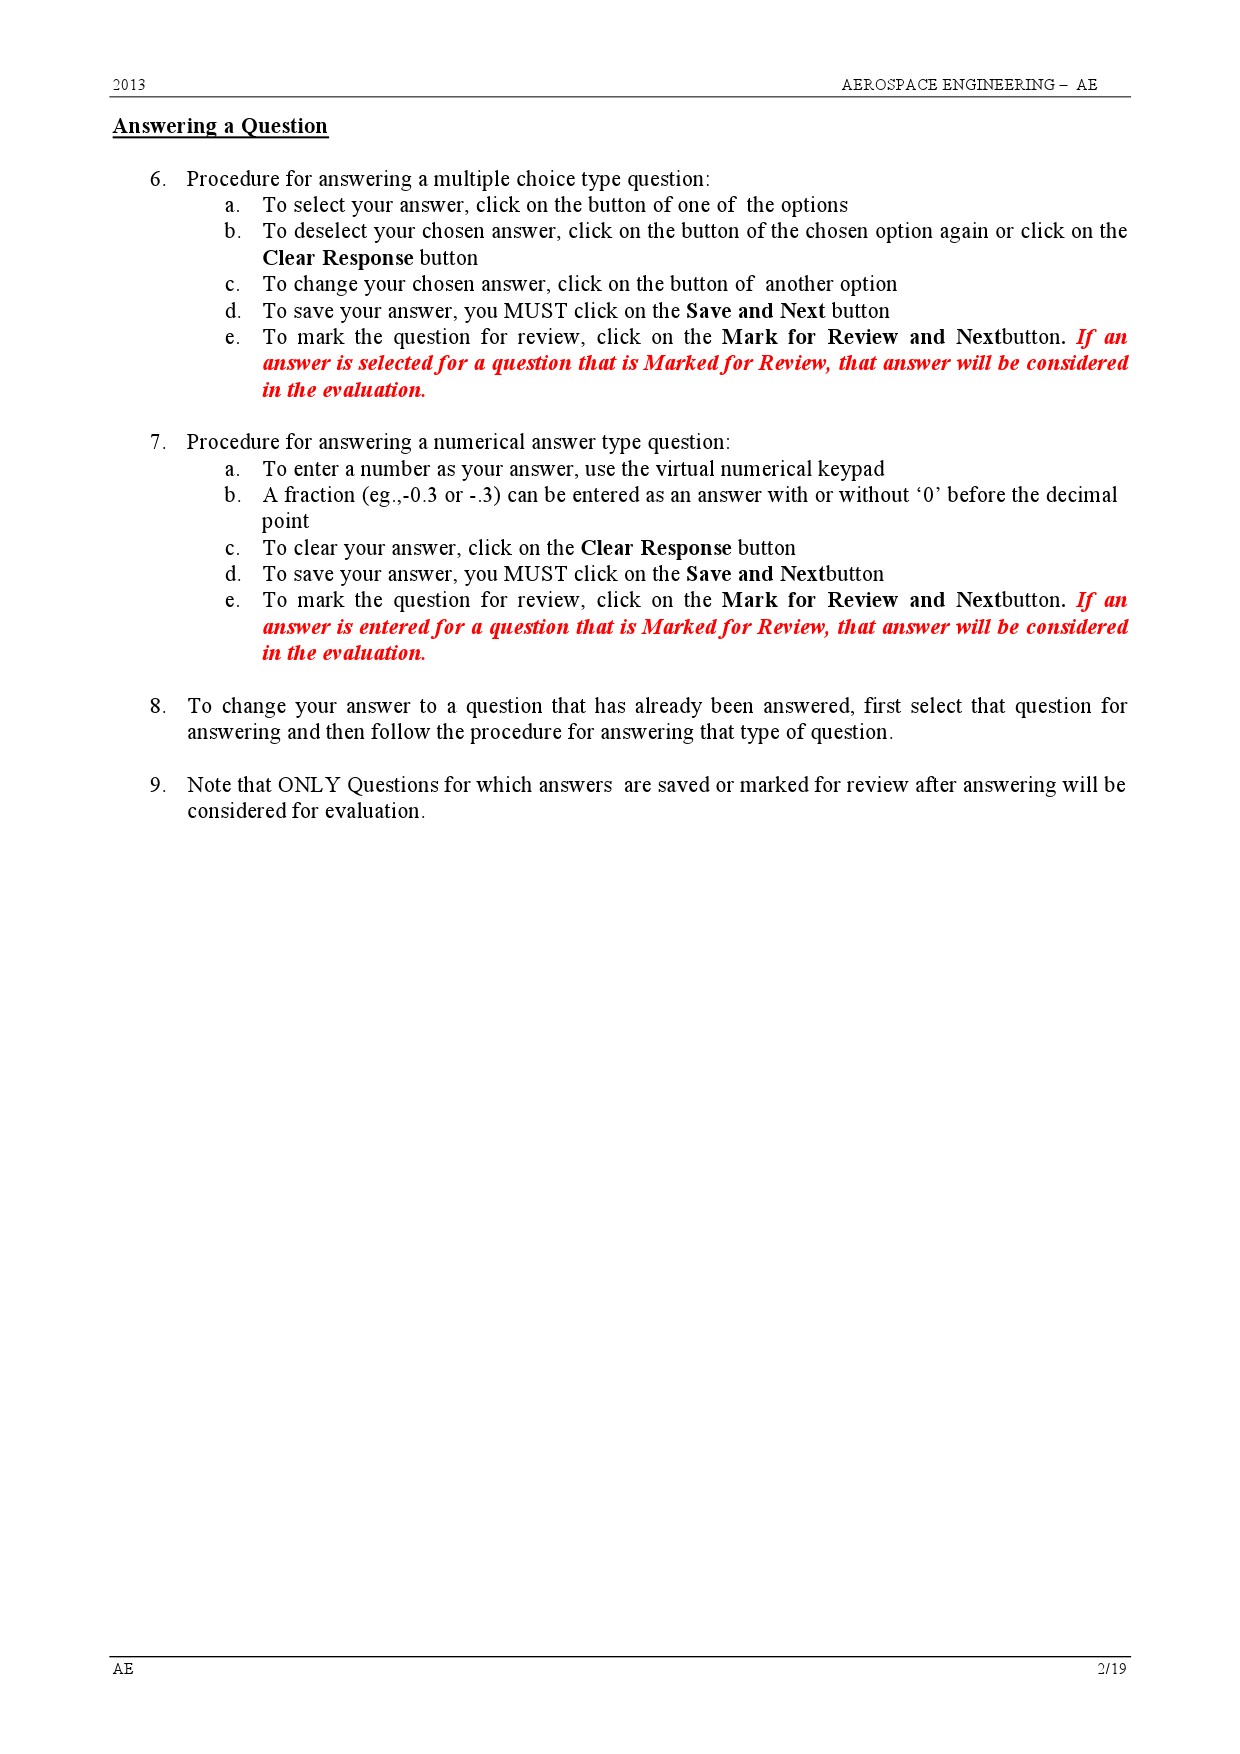 GATE Exam 2013 Aerospace Engineering Question Paper 2